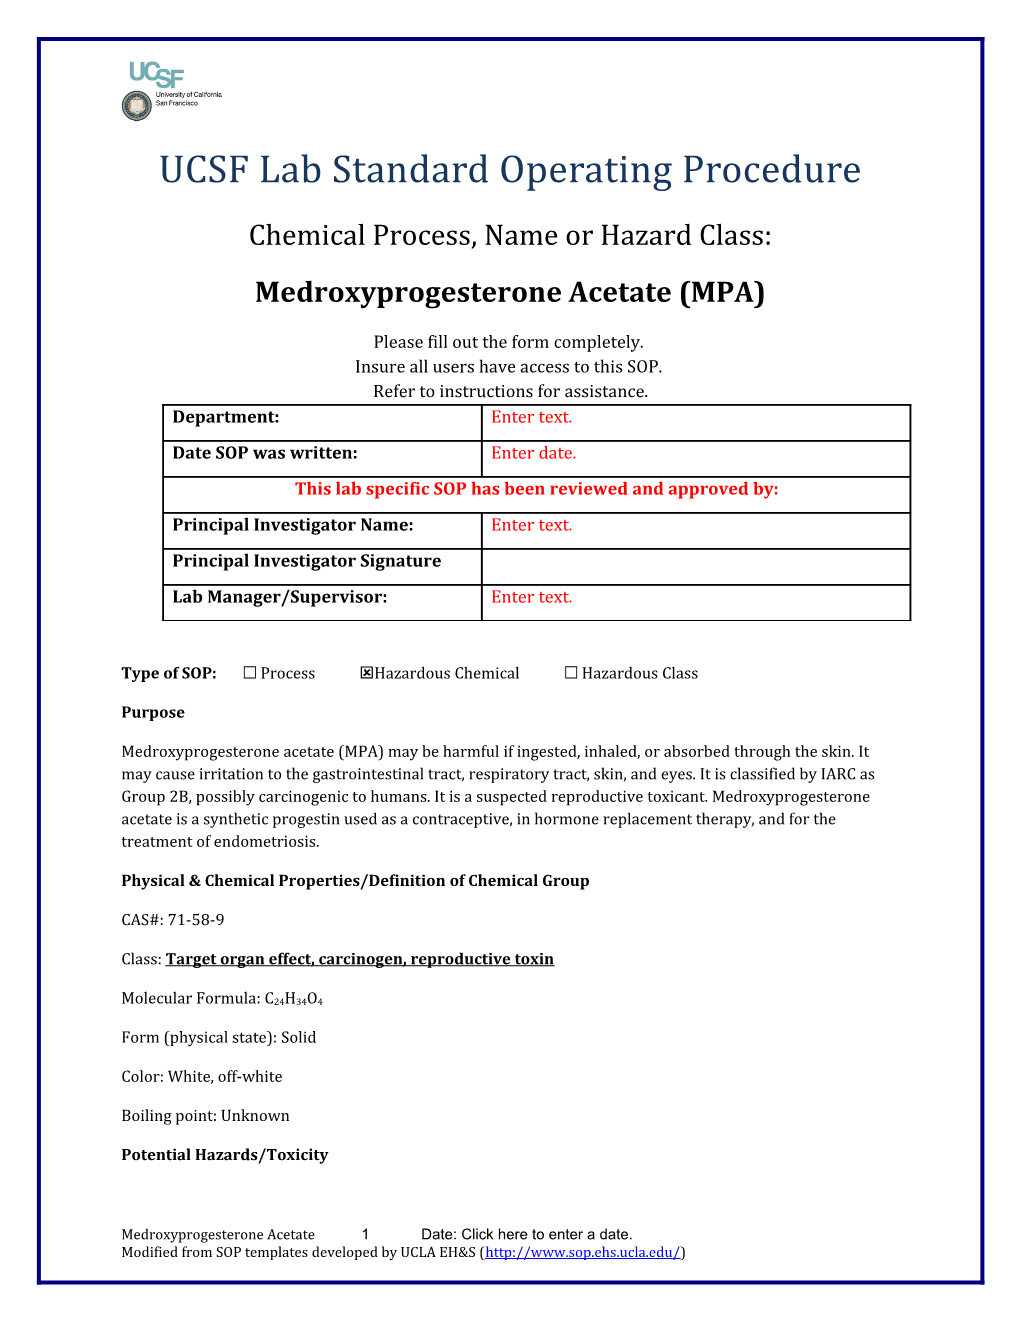 UCSF Lab Standard Operating Procedure s19